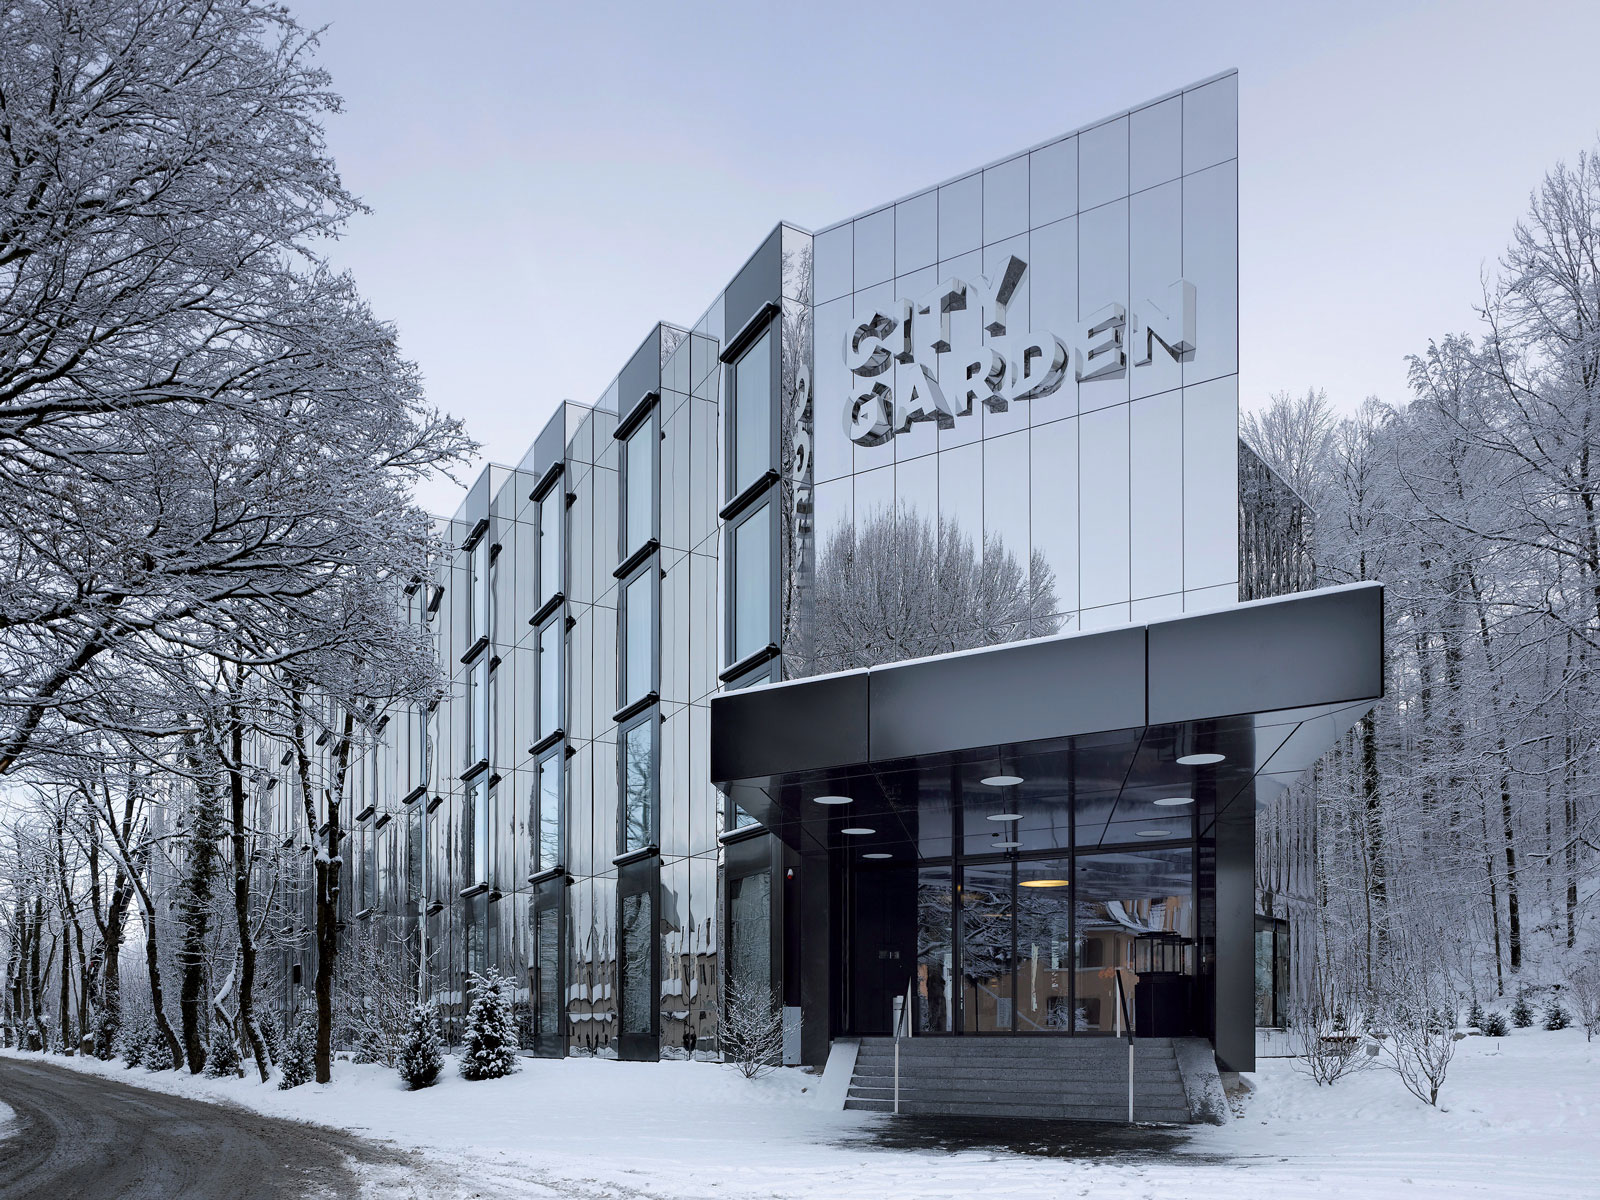 City Garden Hotel, Zug (2009)